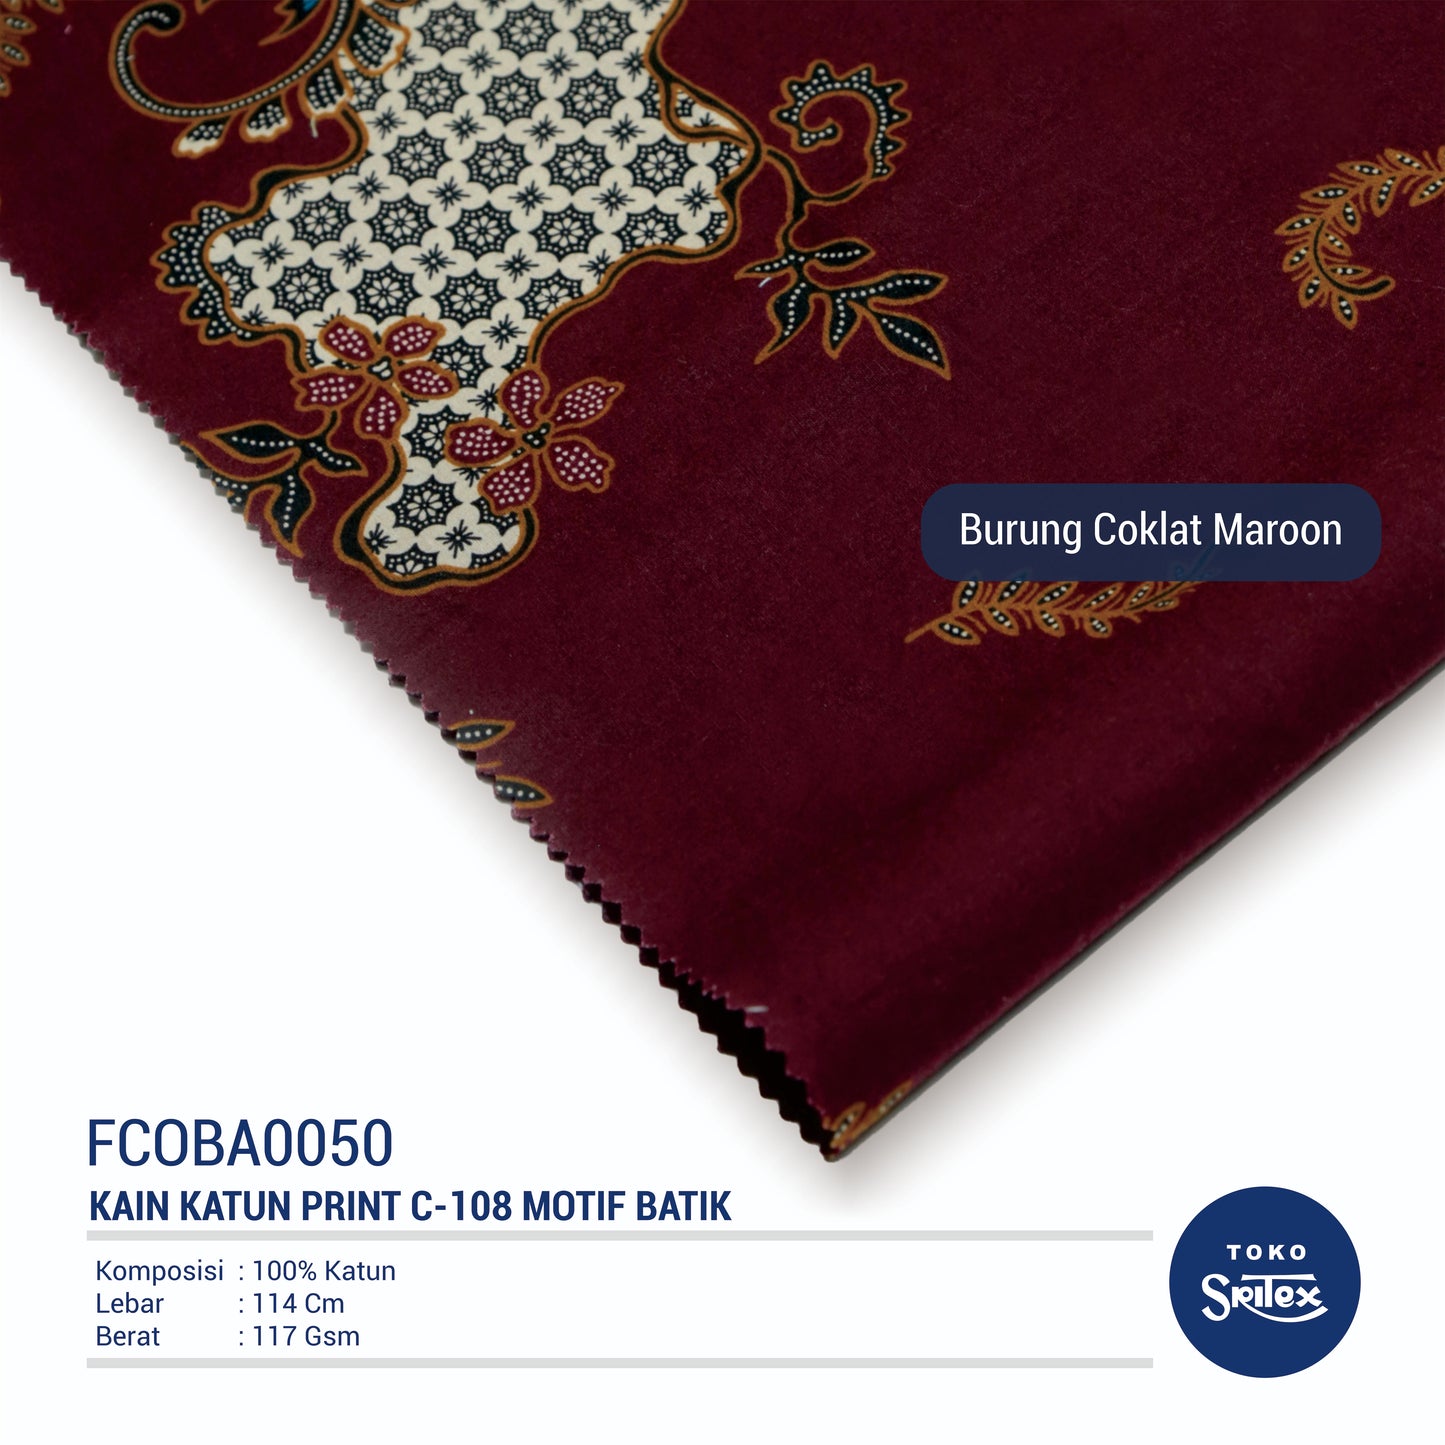 Toko Sritex Kain Katun Print Batik Burung Coklat Maroon Premium Ekspor C108. Harga per 45cm, Lebar 114cm.